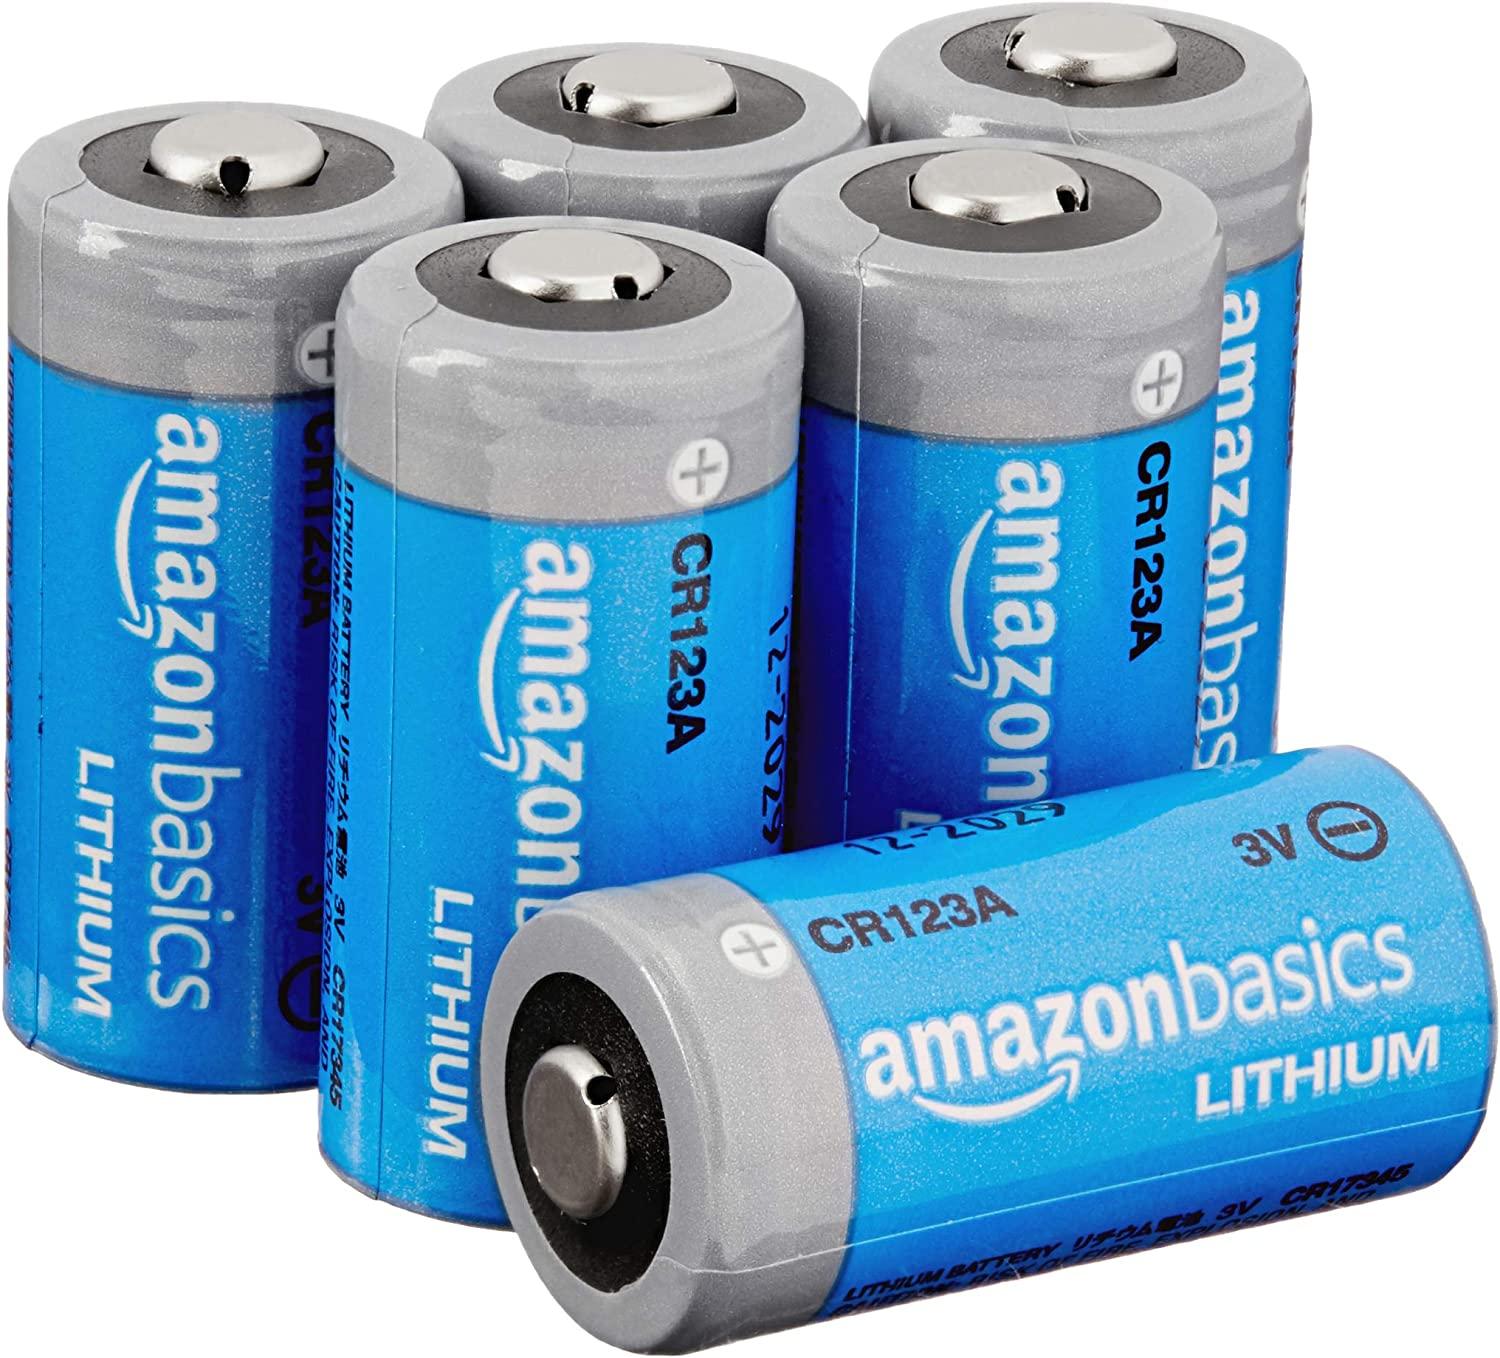 Amazon Basics CR123a 3-Volt Lithium Batteries 6 Pack for $8.25